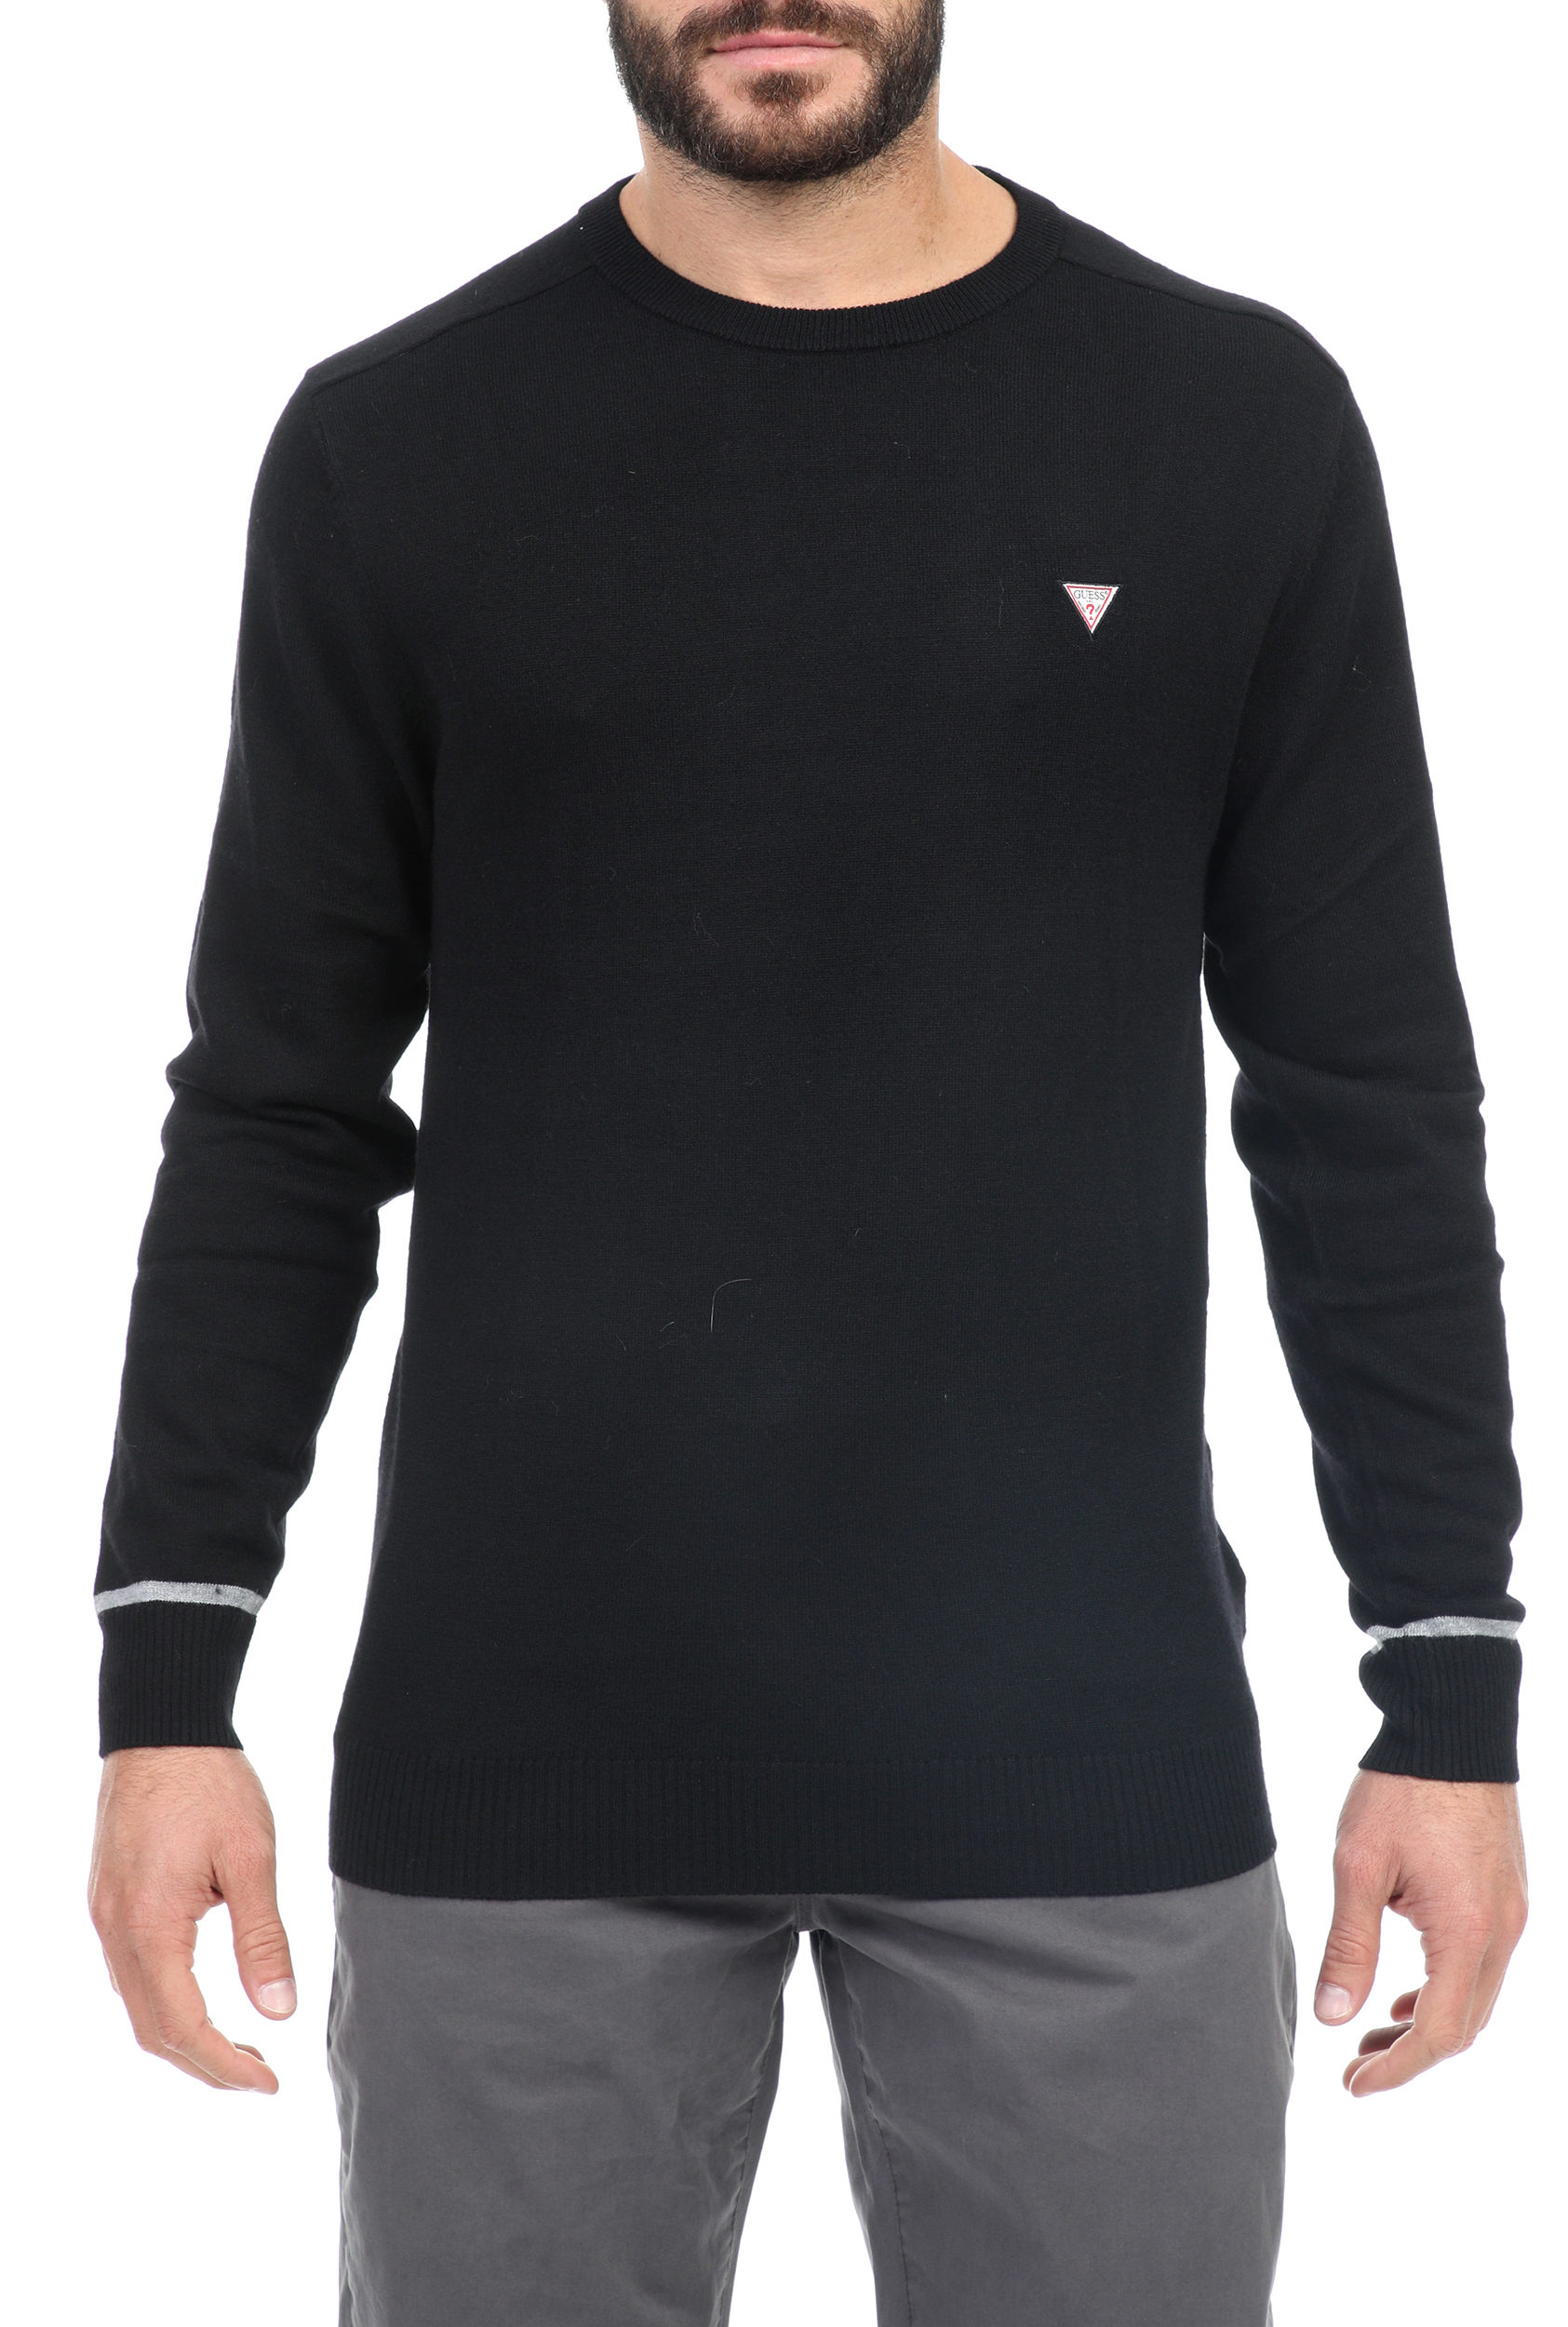 GUESS - Ανδρική πλεκτή μπλούζα GUESS μαύρη Ανδρικά/Ρούχα/Πλεκτά-Ζακέτες/Μπλούζες